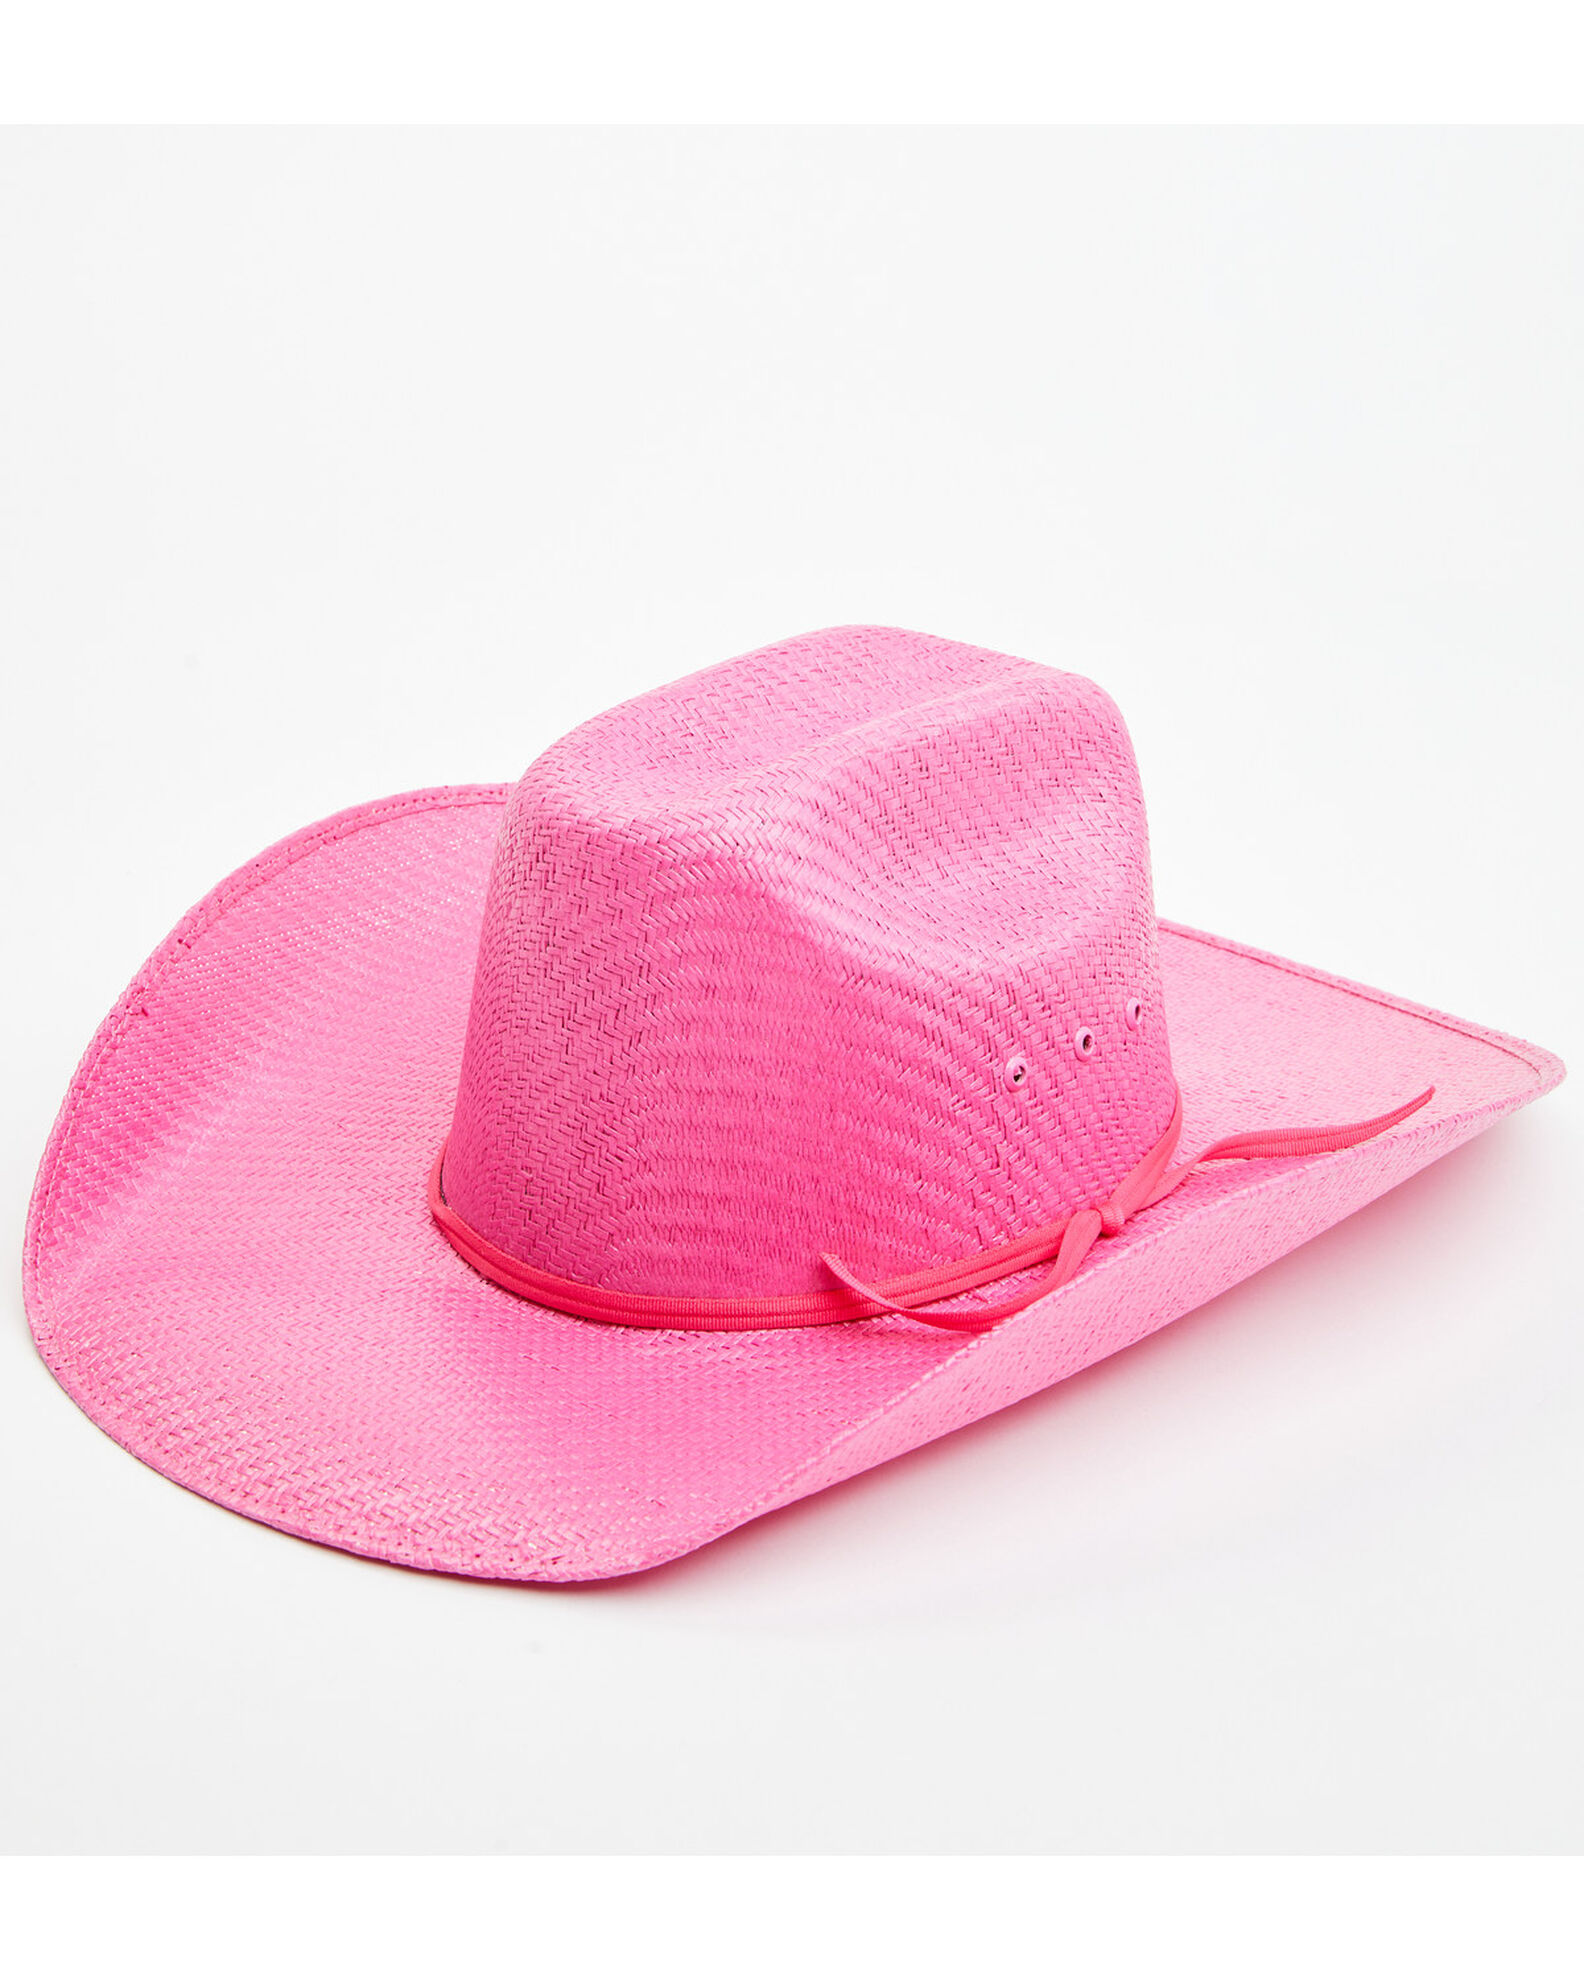 Twisted Little Girls' Straw Hat